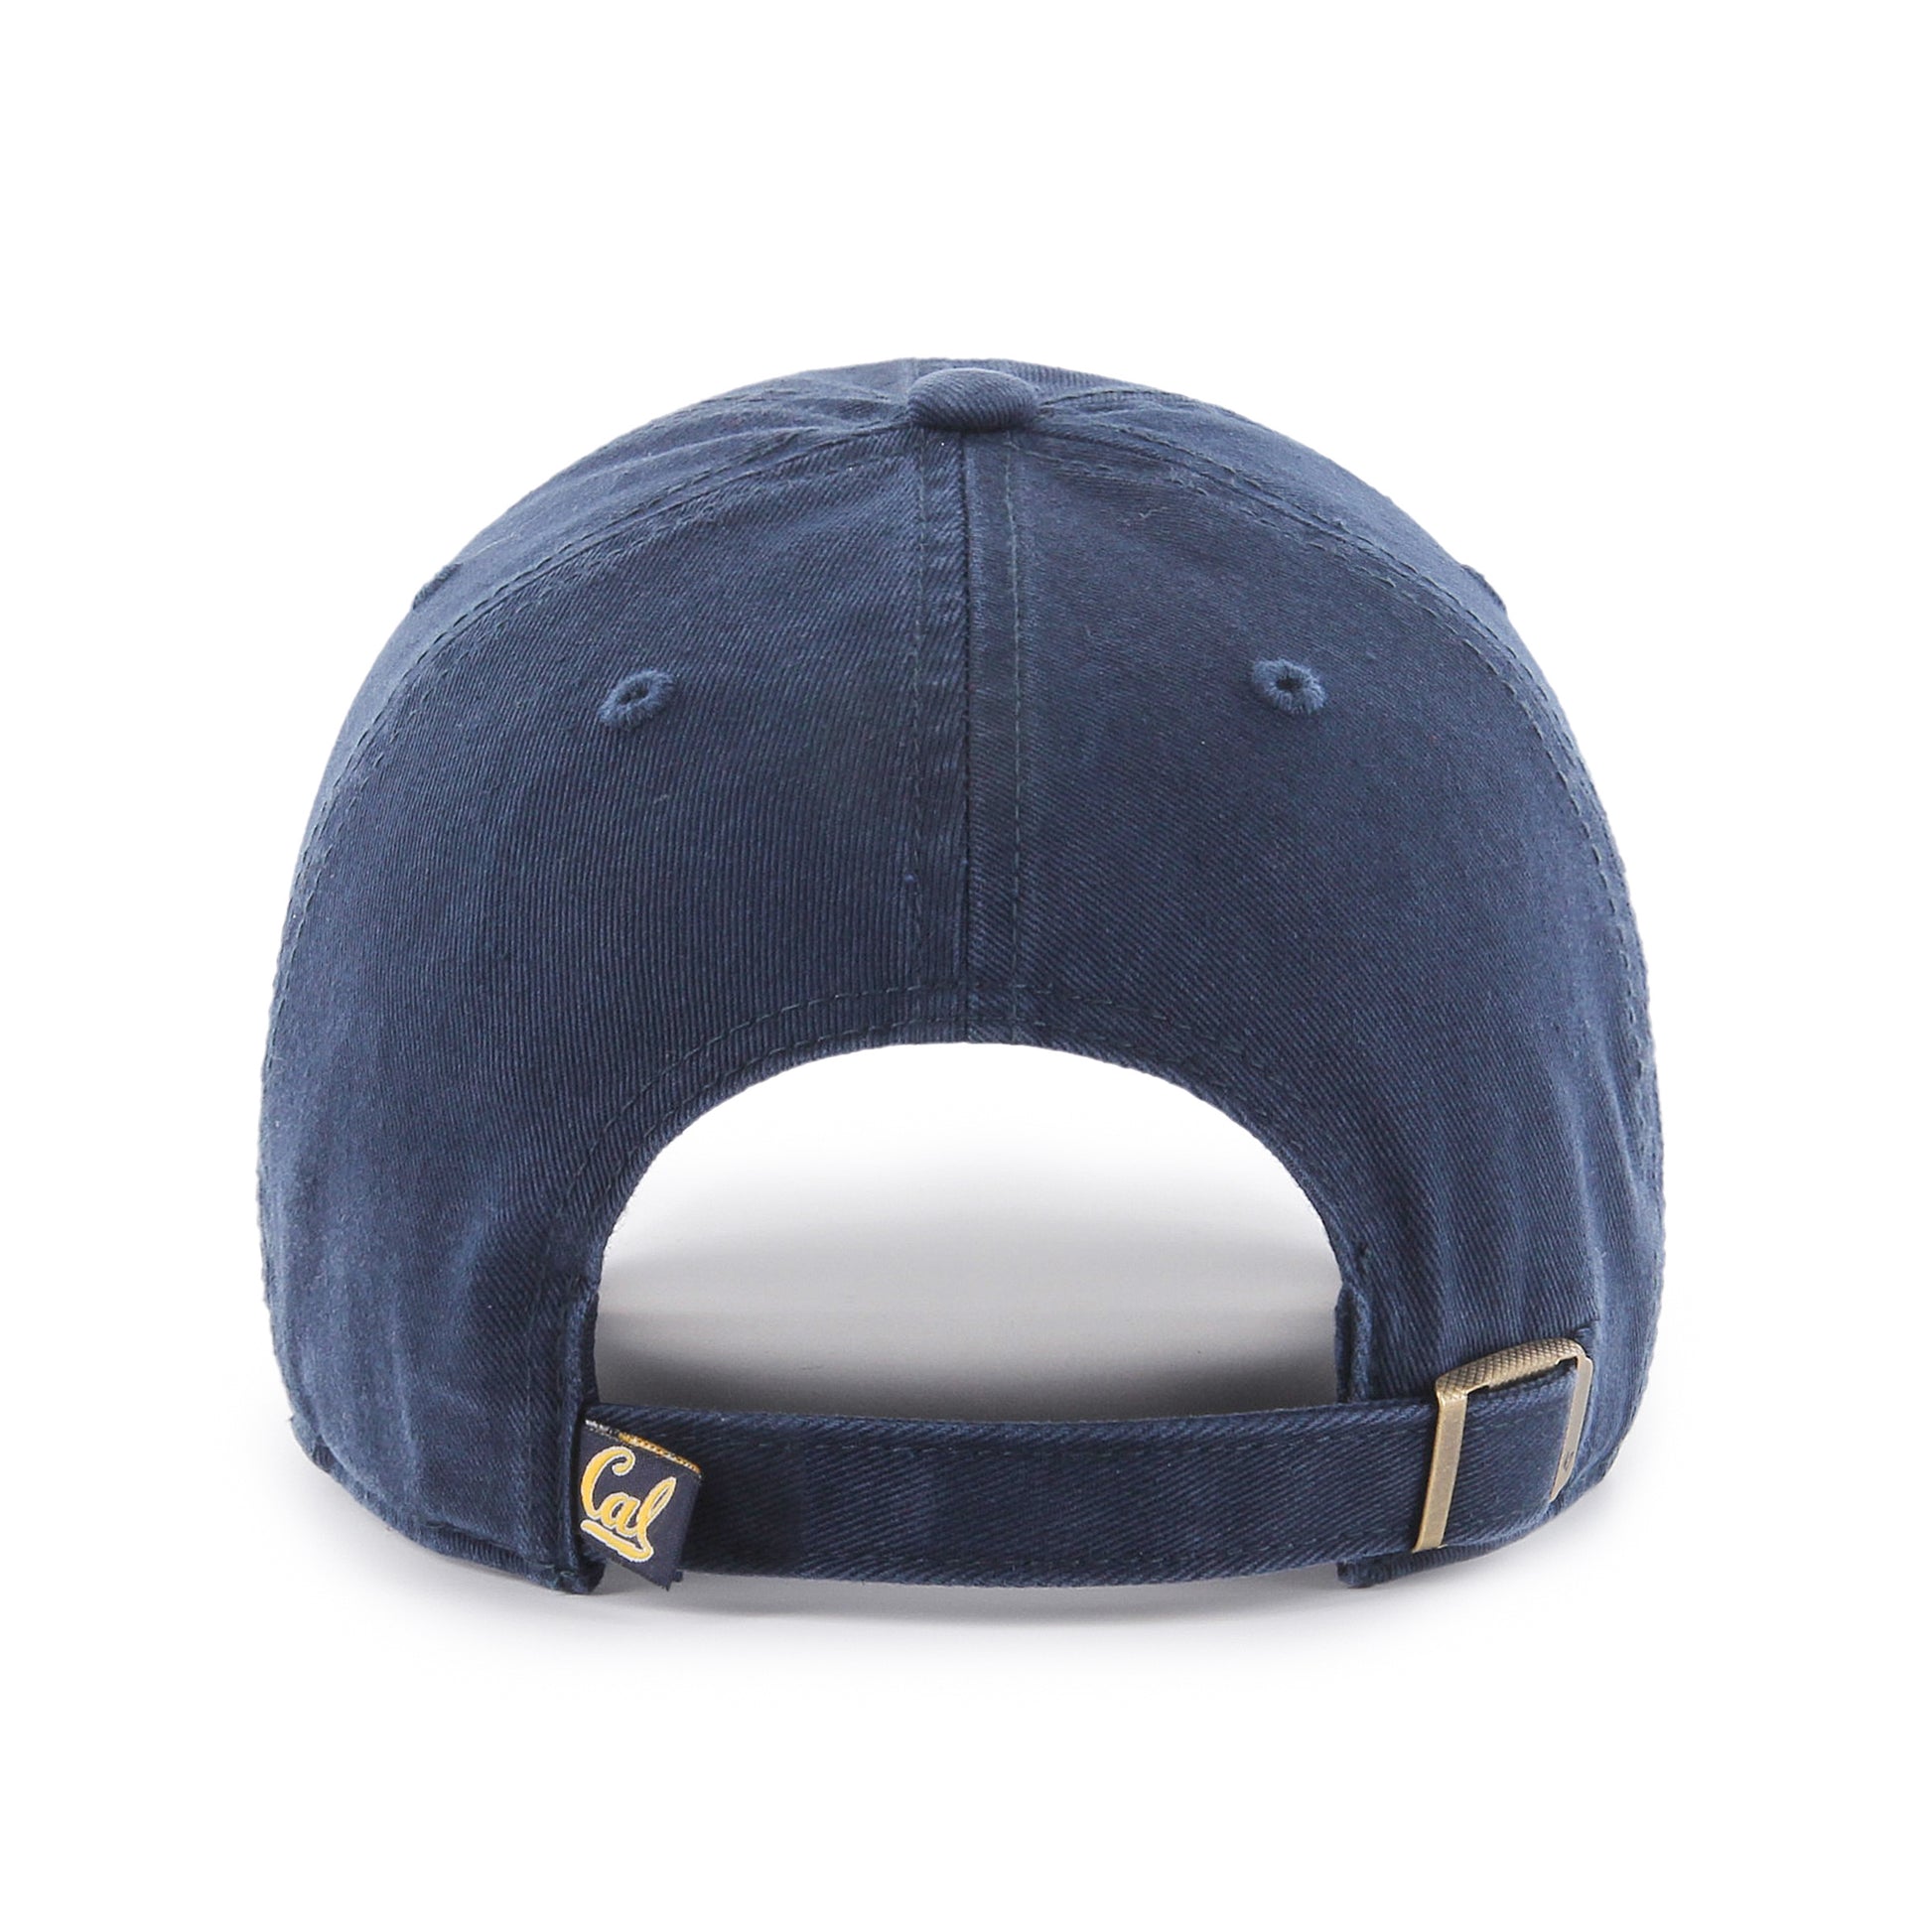 U.C. Berkeley Cal Embroidered tone on tone adjustable hat-Navy-Shop College Wear